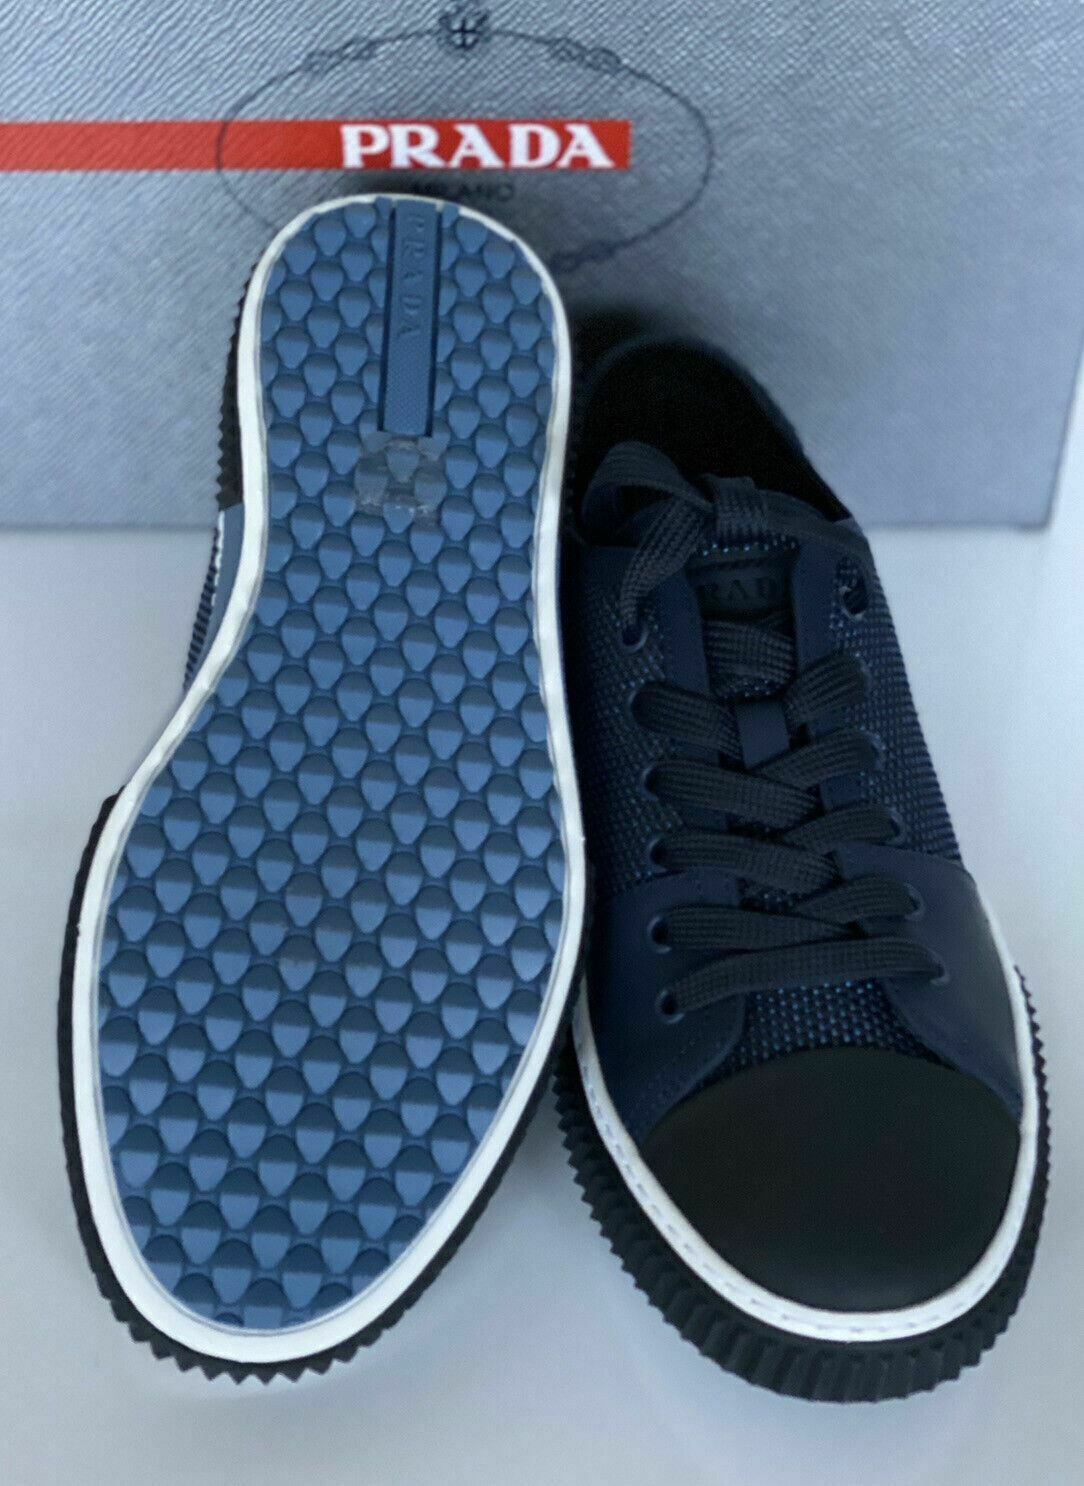 NIB PRADA Herren-Sneakers aus blauem Leder/Nylon, 8,5 US (Prada 7,5) 4E3058 